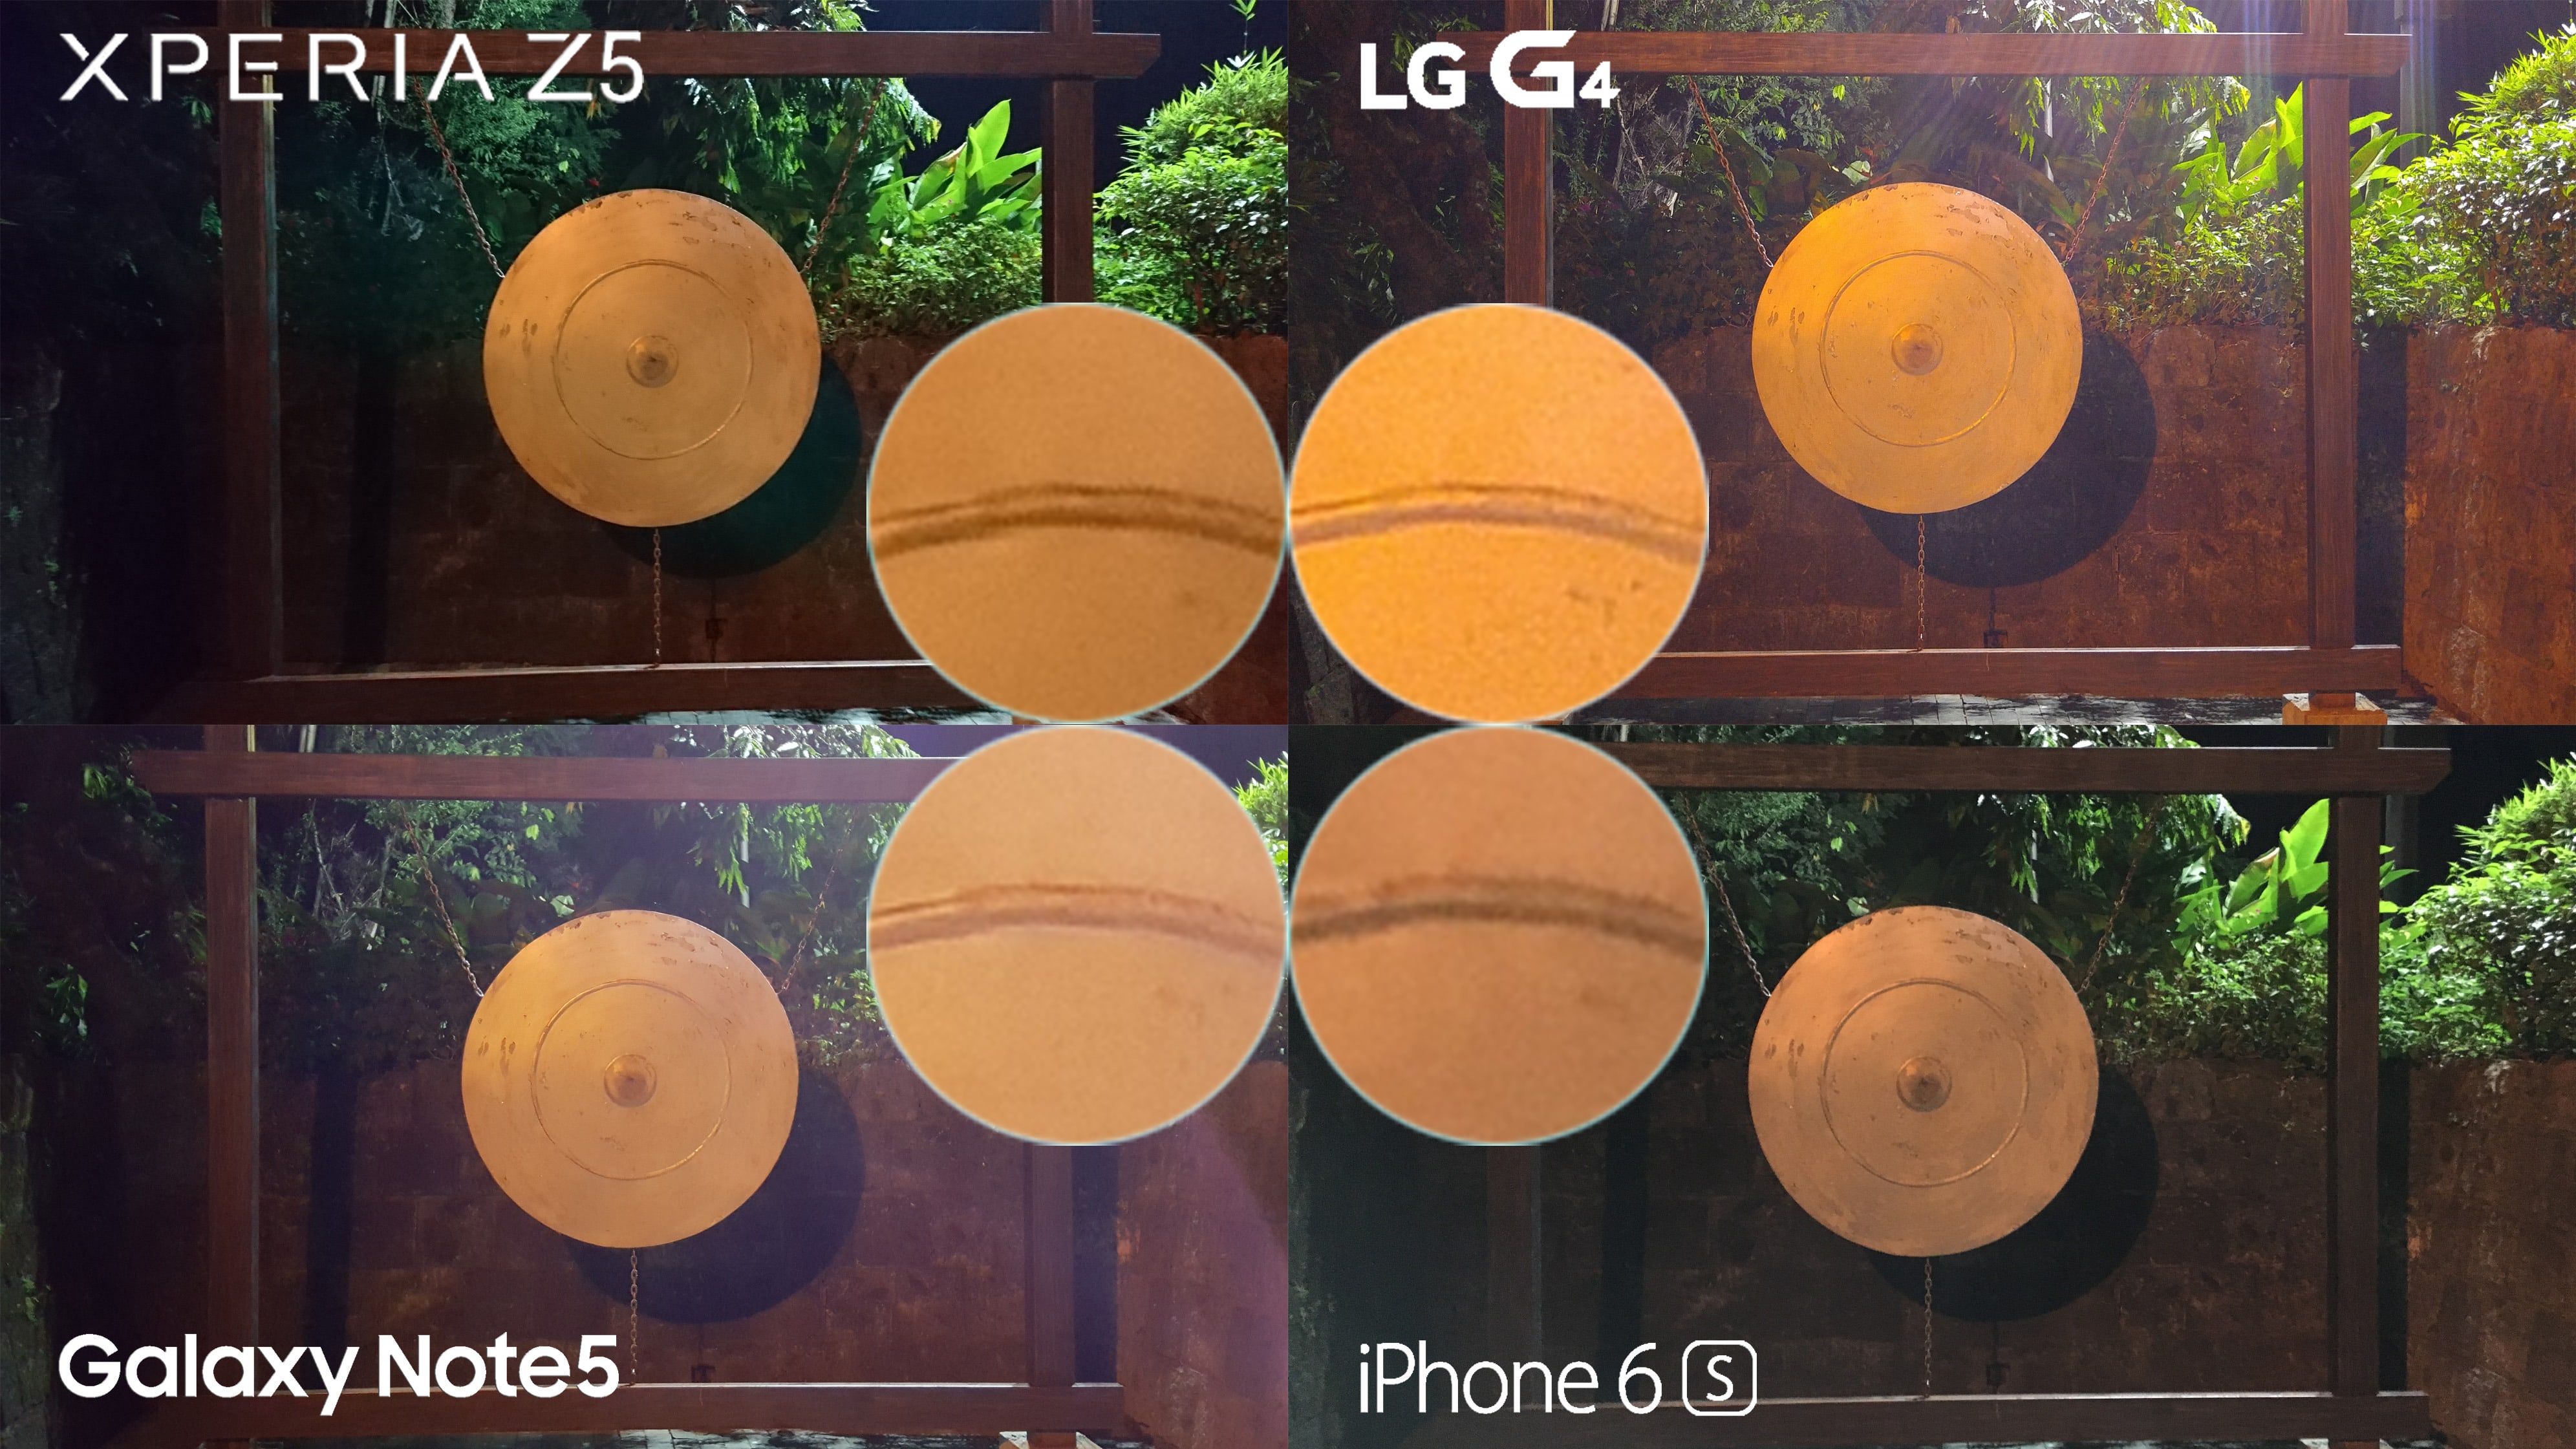 xperia-z5-lg-g4-iphone-6s-galaxy-note-5-camera-review-comparison16-min